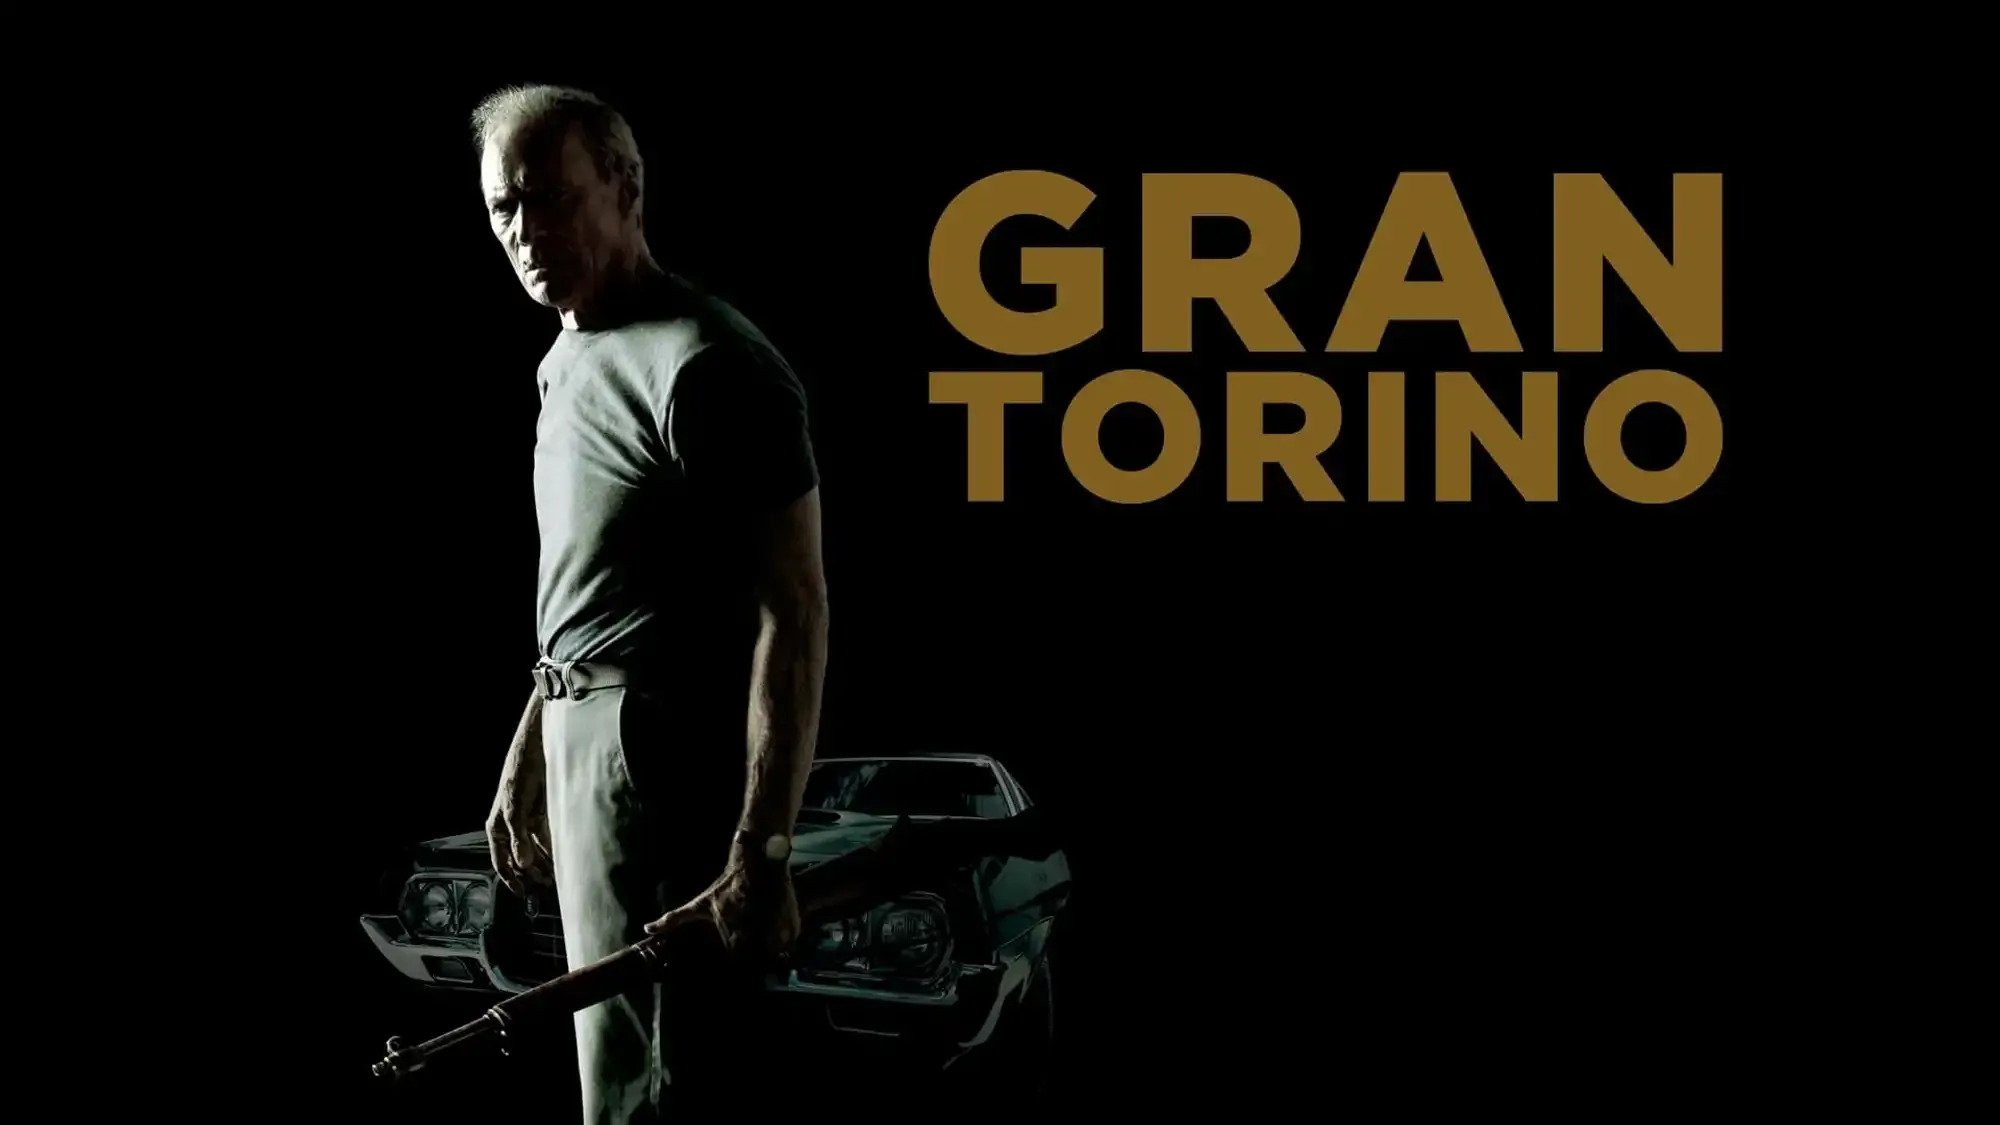 Gran Torino movie review